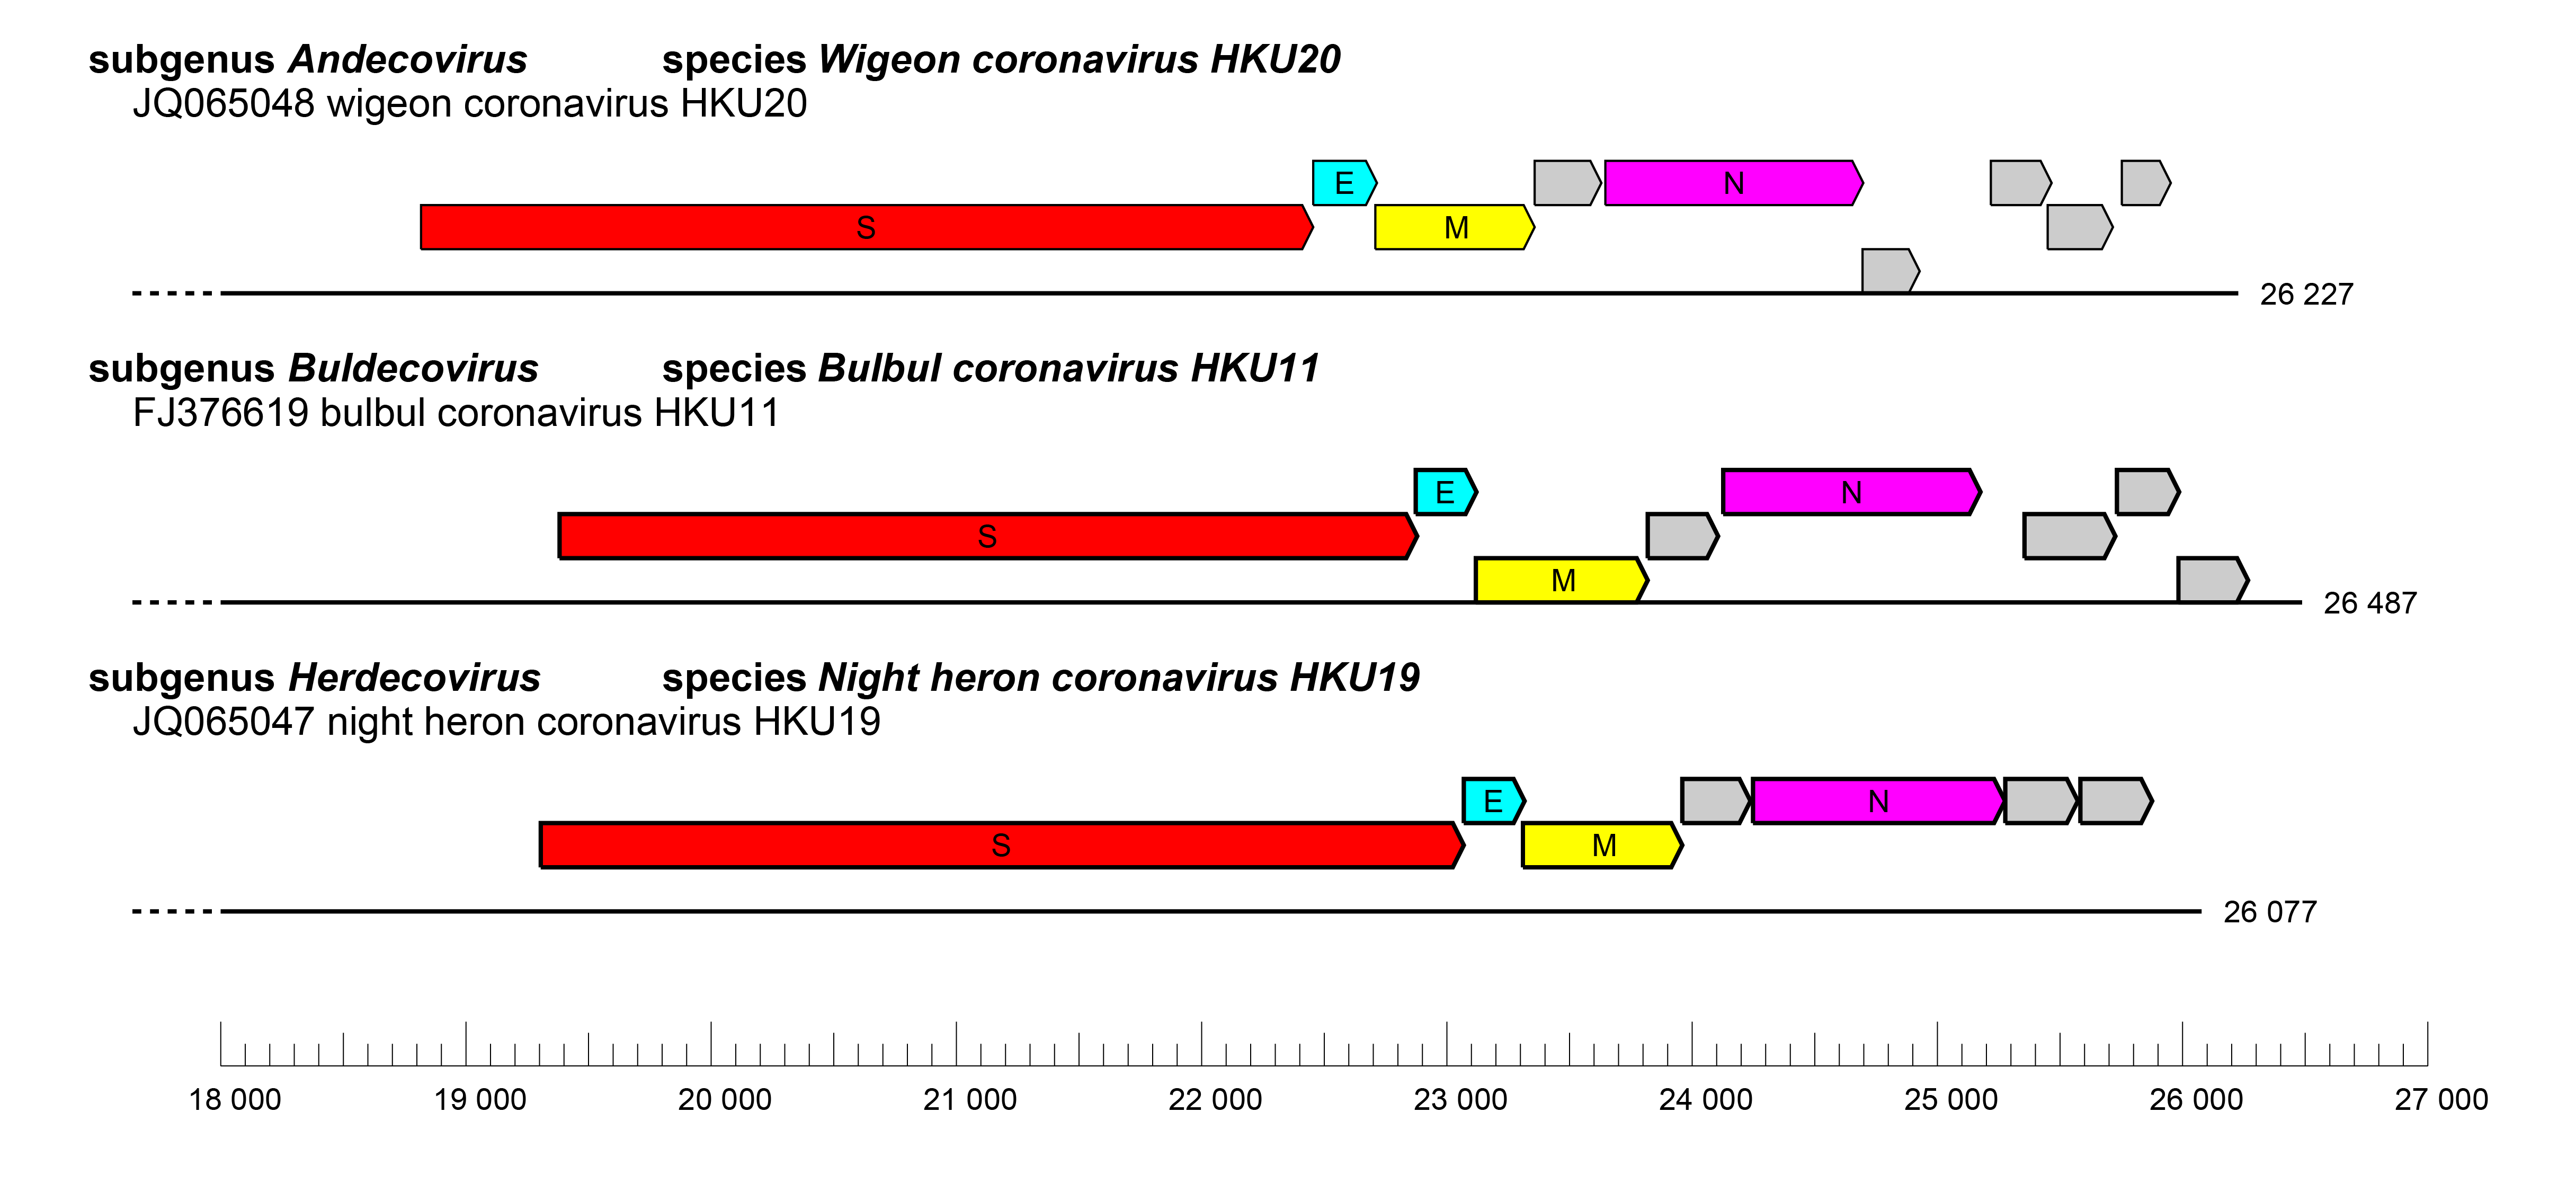 Deltacoronavirus genome organisation